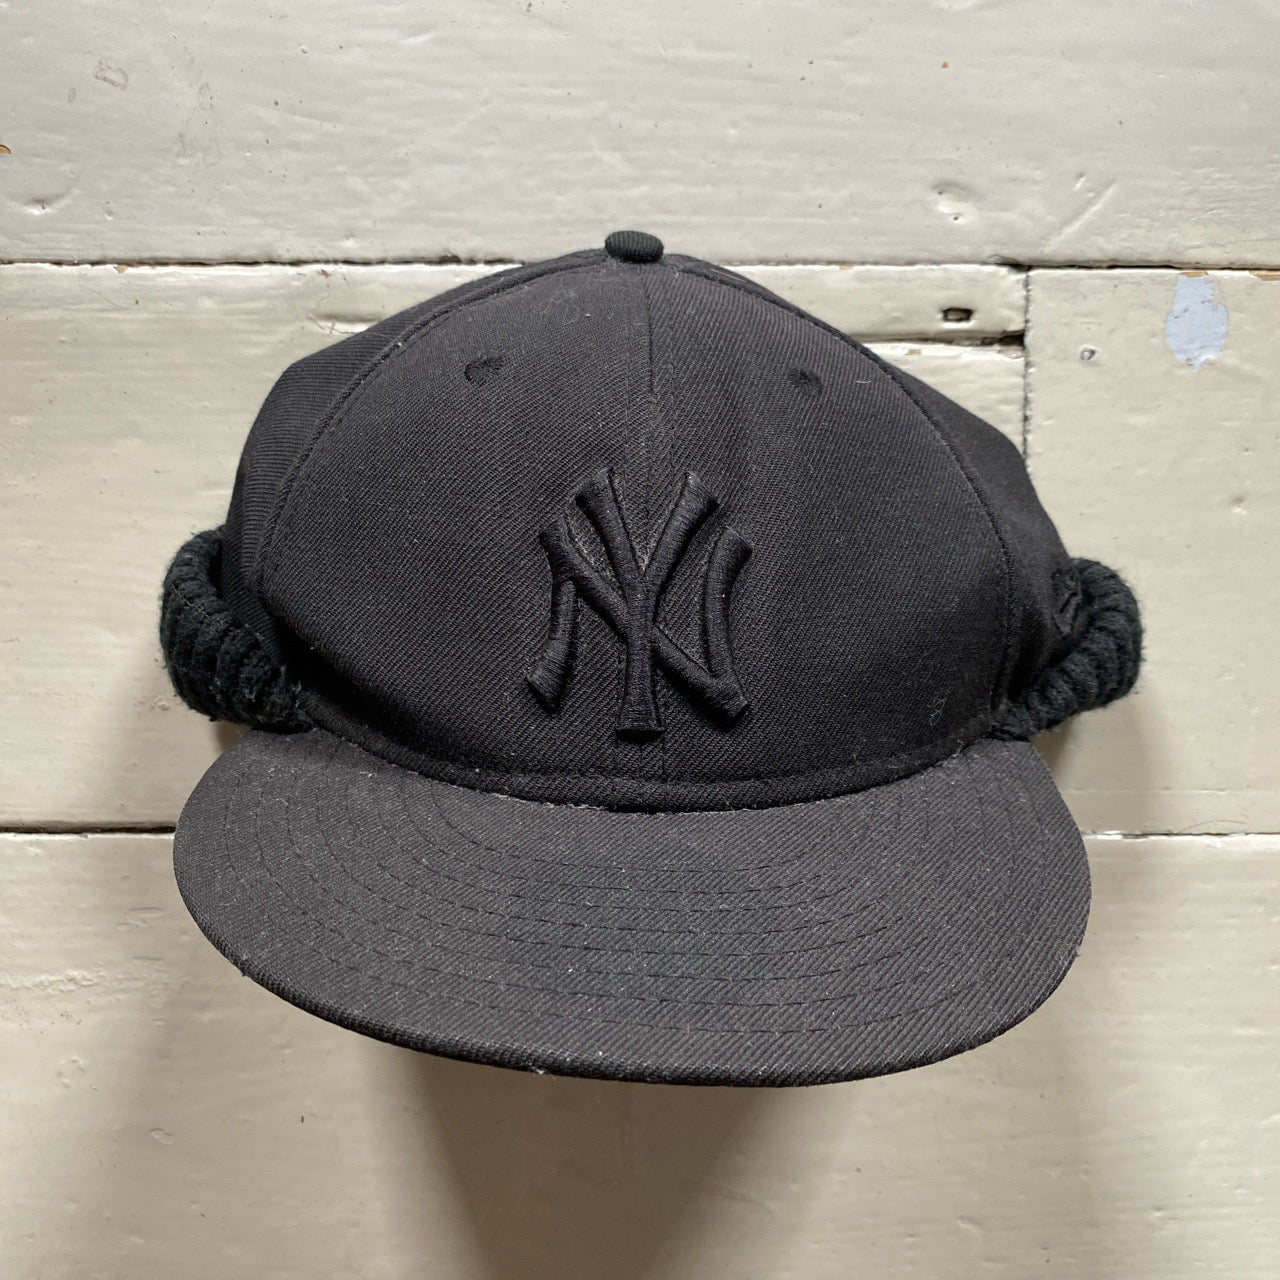 New York Yankees New Era Beanie Fitted Cap (Size 7 1/4)